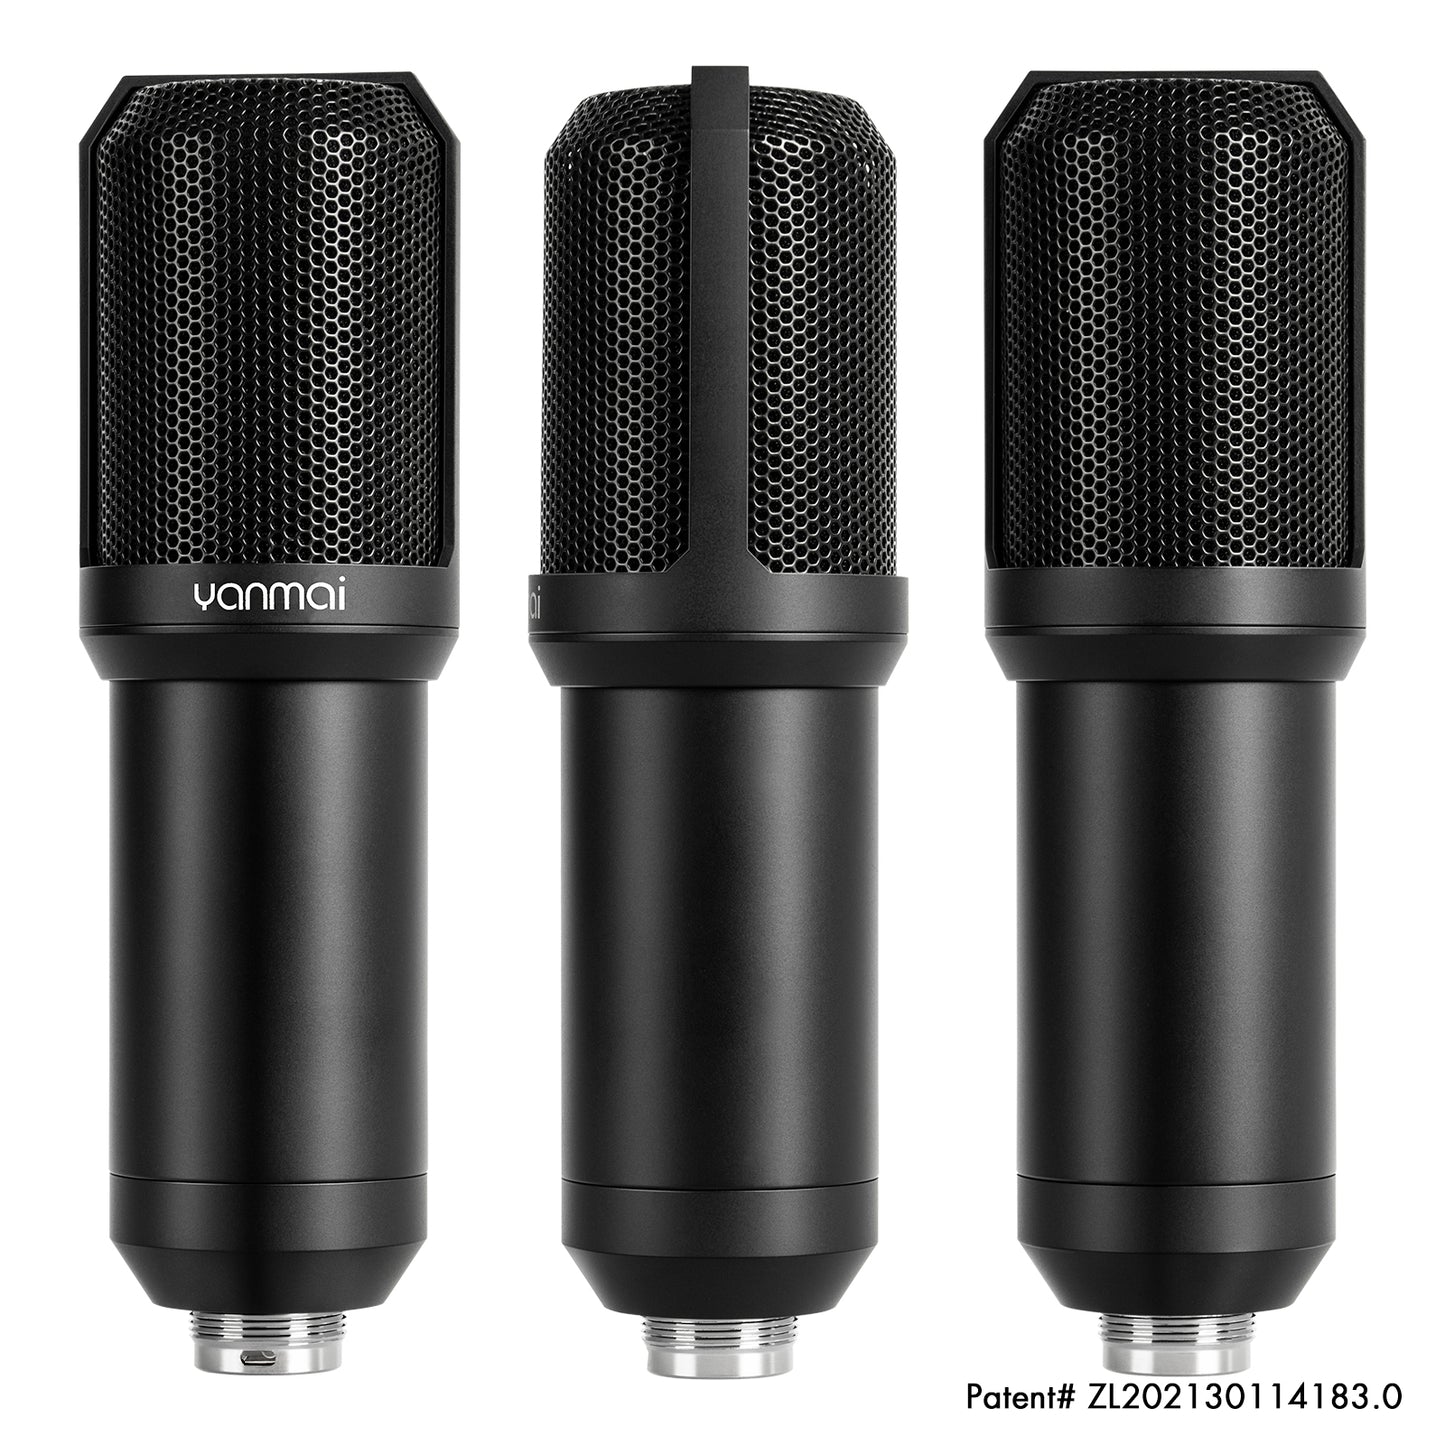 Yanmai Q10B Professional Condenser Usb Desktop Streaming Microphone Kit